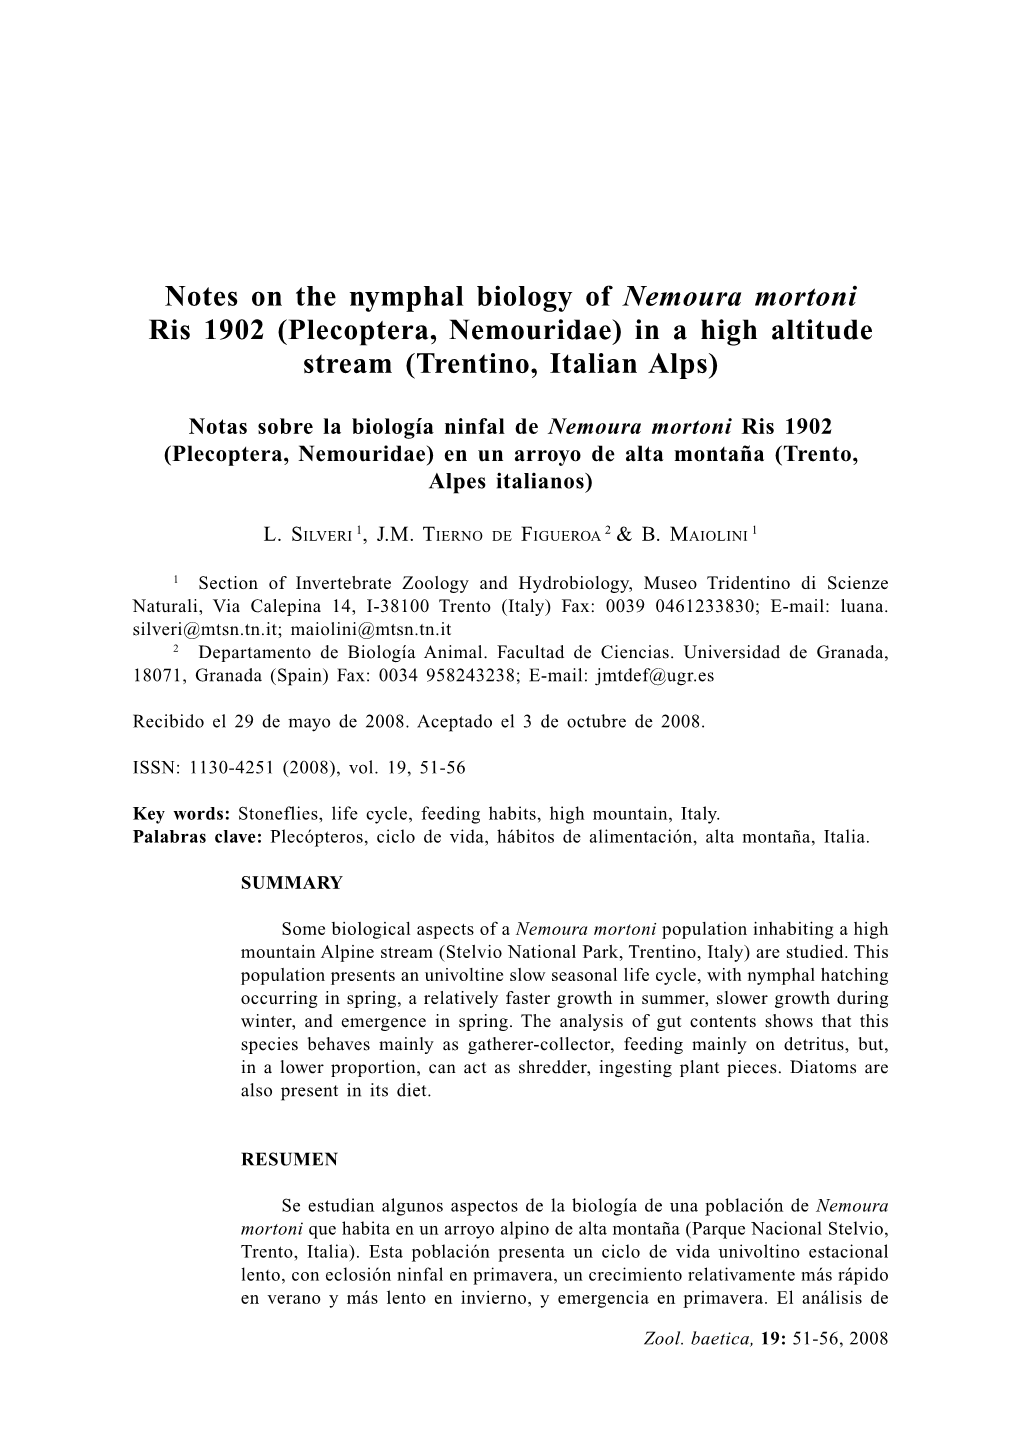 Notes on the Nymphal Biology of Nemoura Mortoni Ris 1902 (Plecoptera, Nemouridae) in a High Altitude Stream (Trentino, Italian Alps)